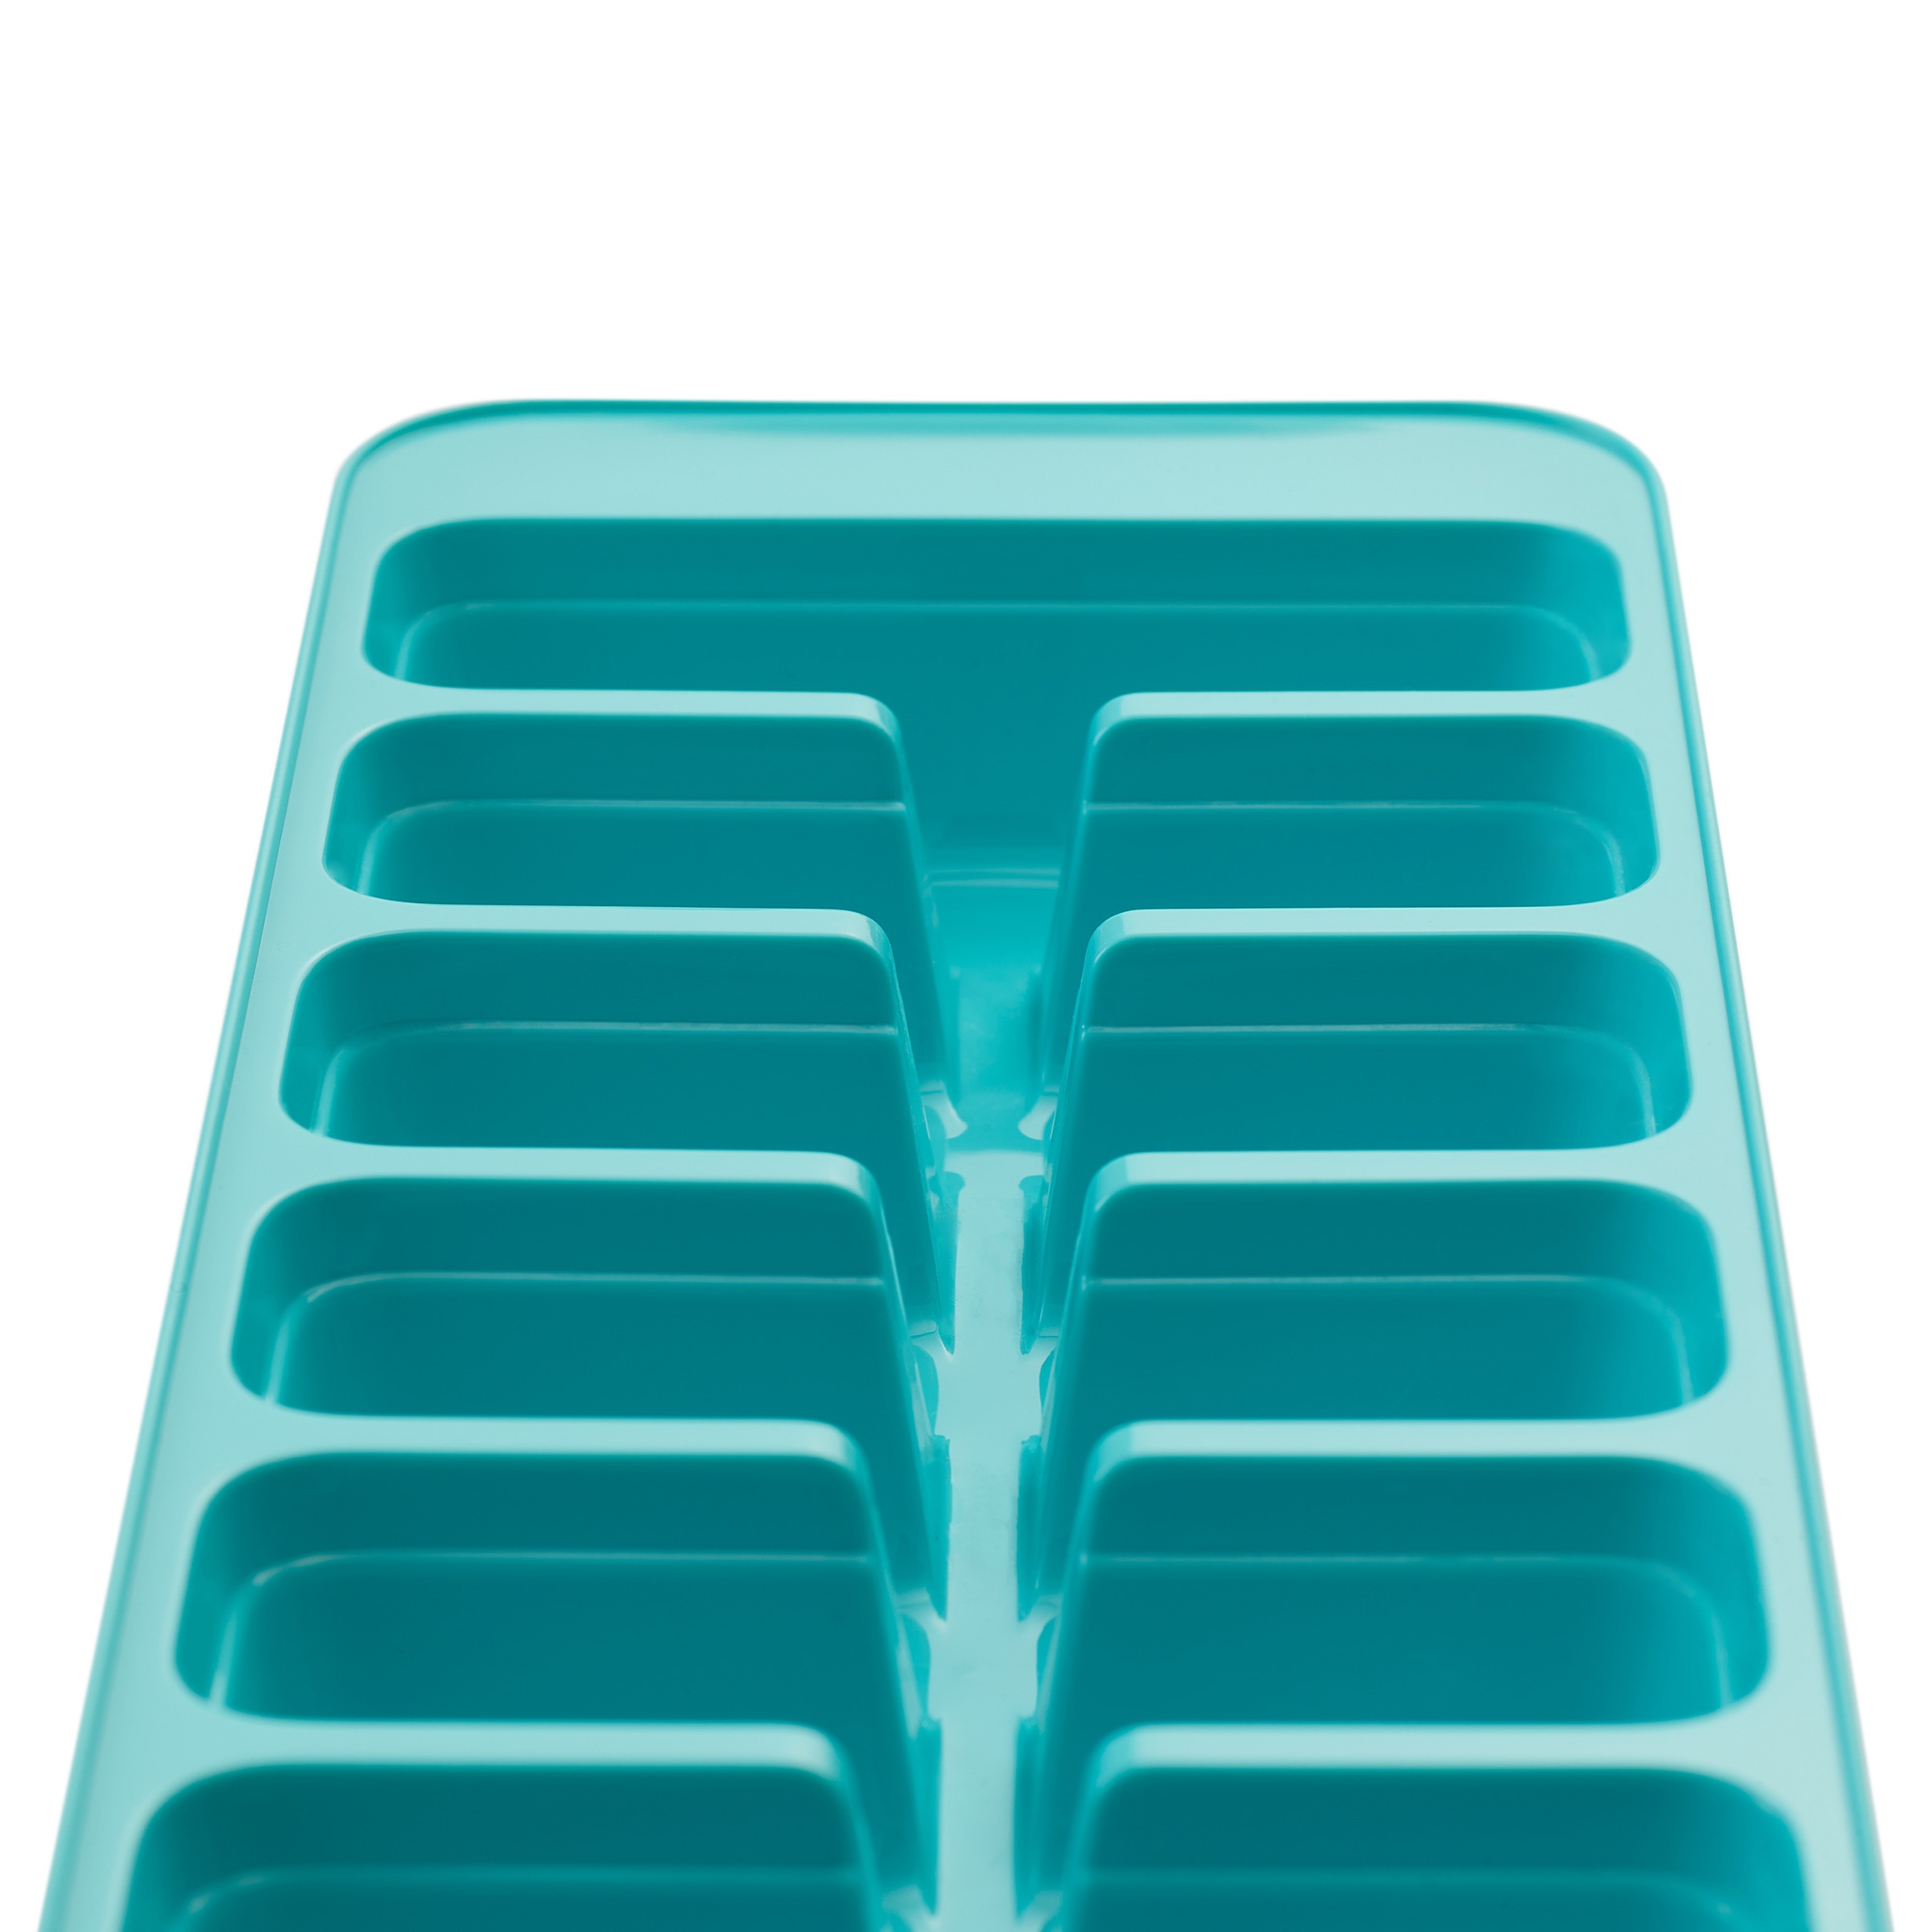 Joseph Joseph - Ice cube tray - Flow Easy-fill - blue